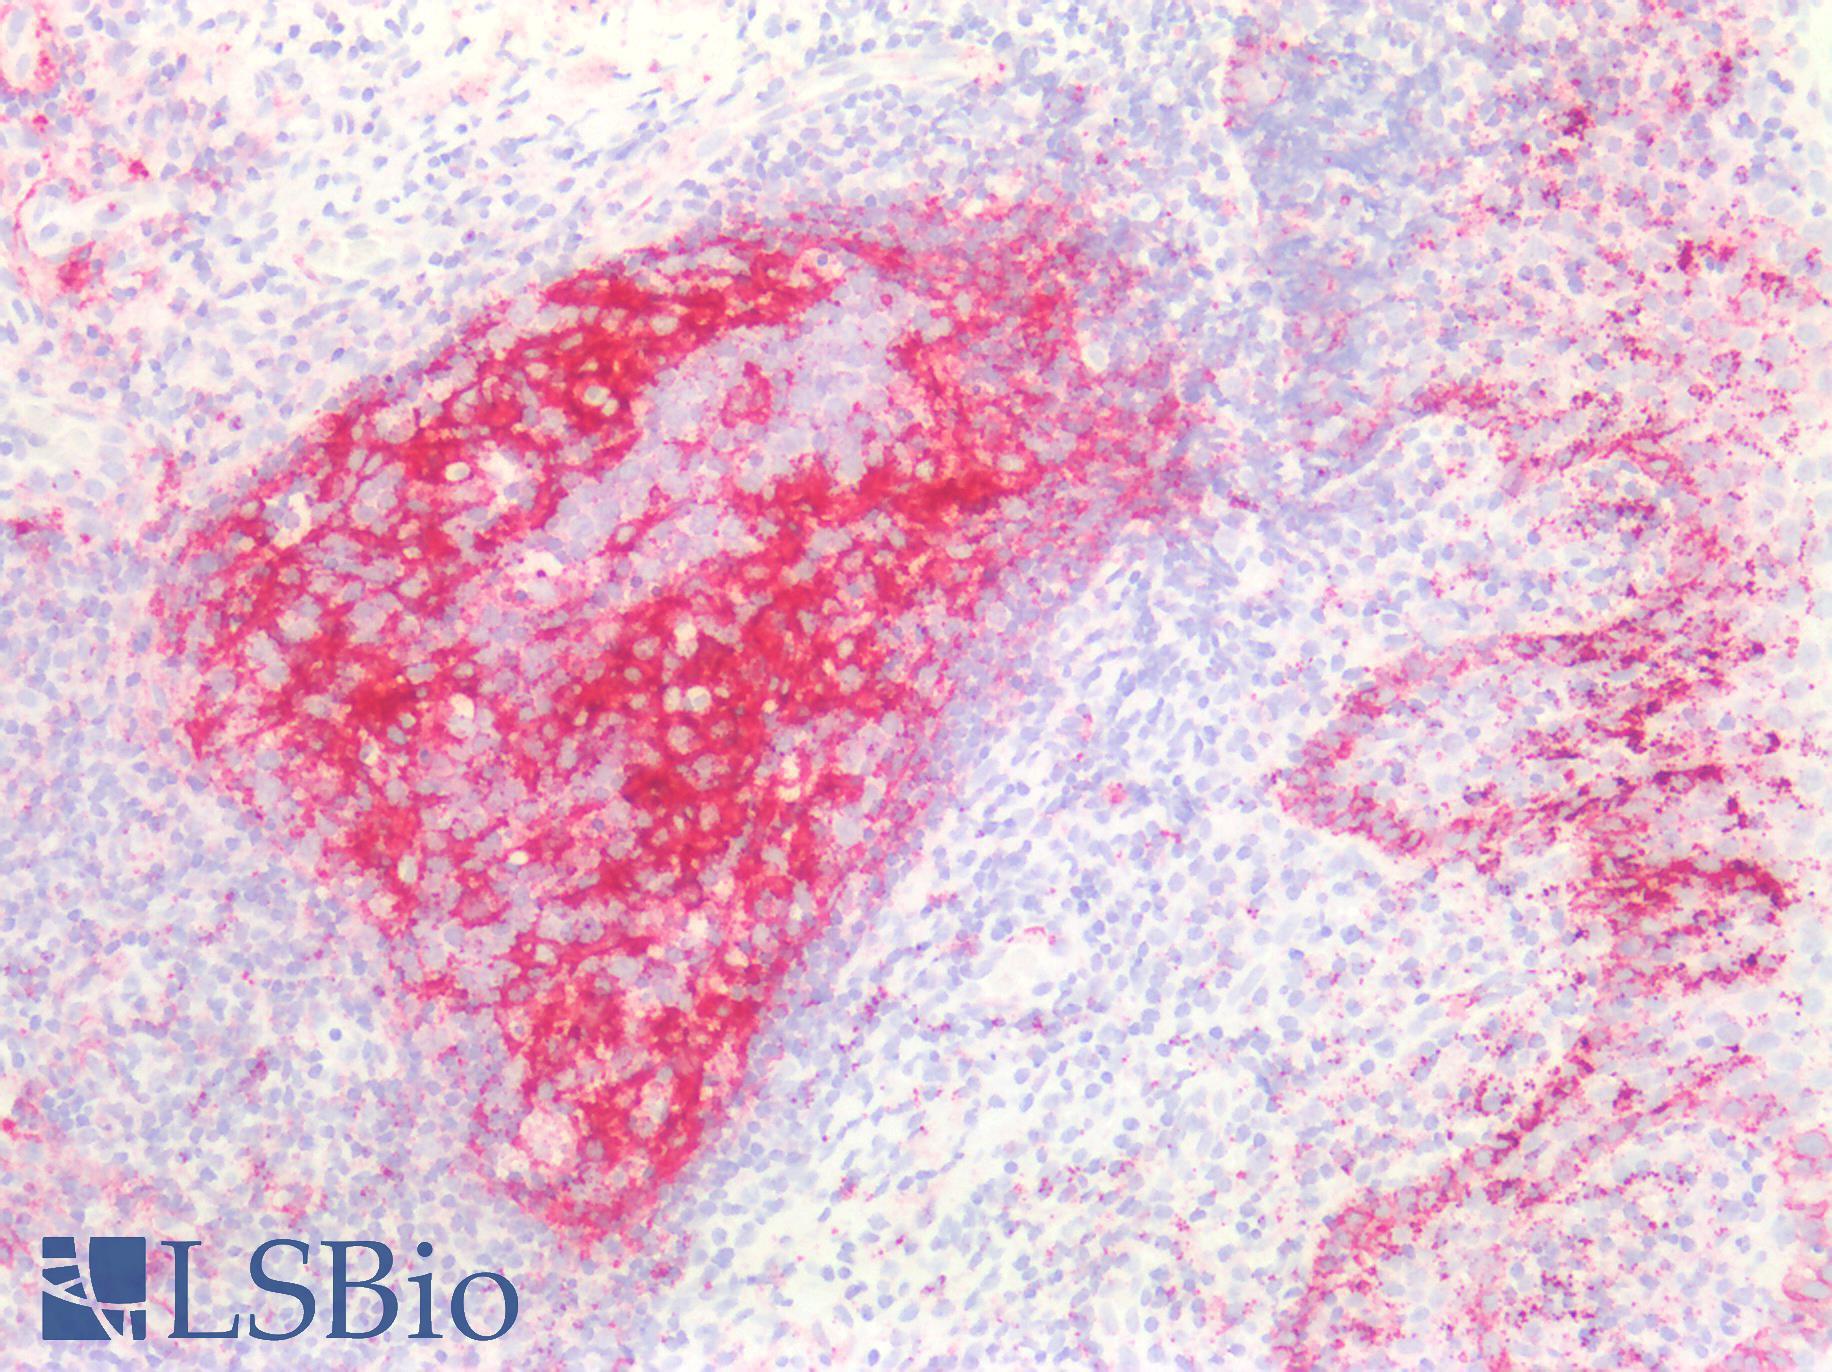 NGFR / CD271 / TNR16 Antibody - Human Tonsil: Formalin-Fixed, Paraffin-Embedded (FFPE)